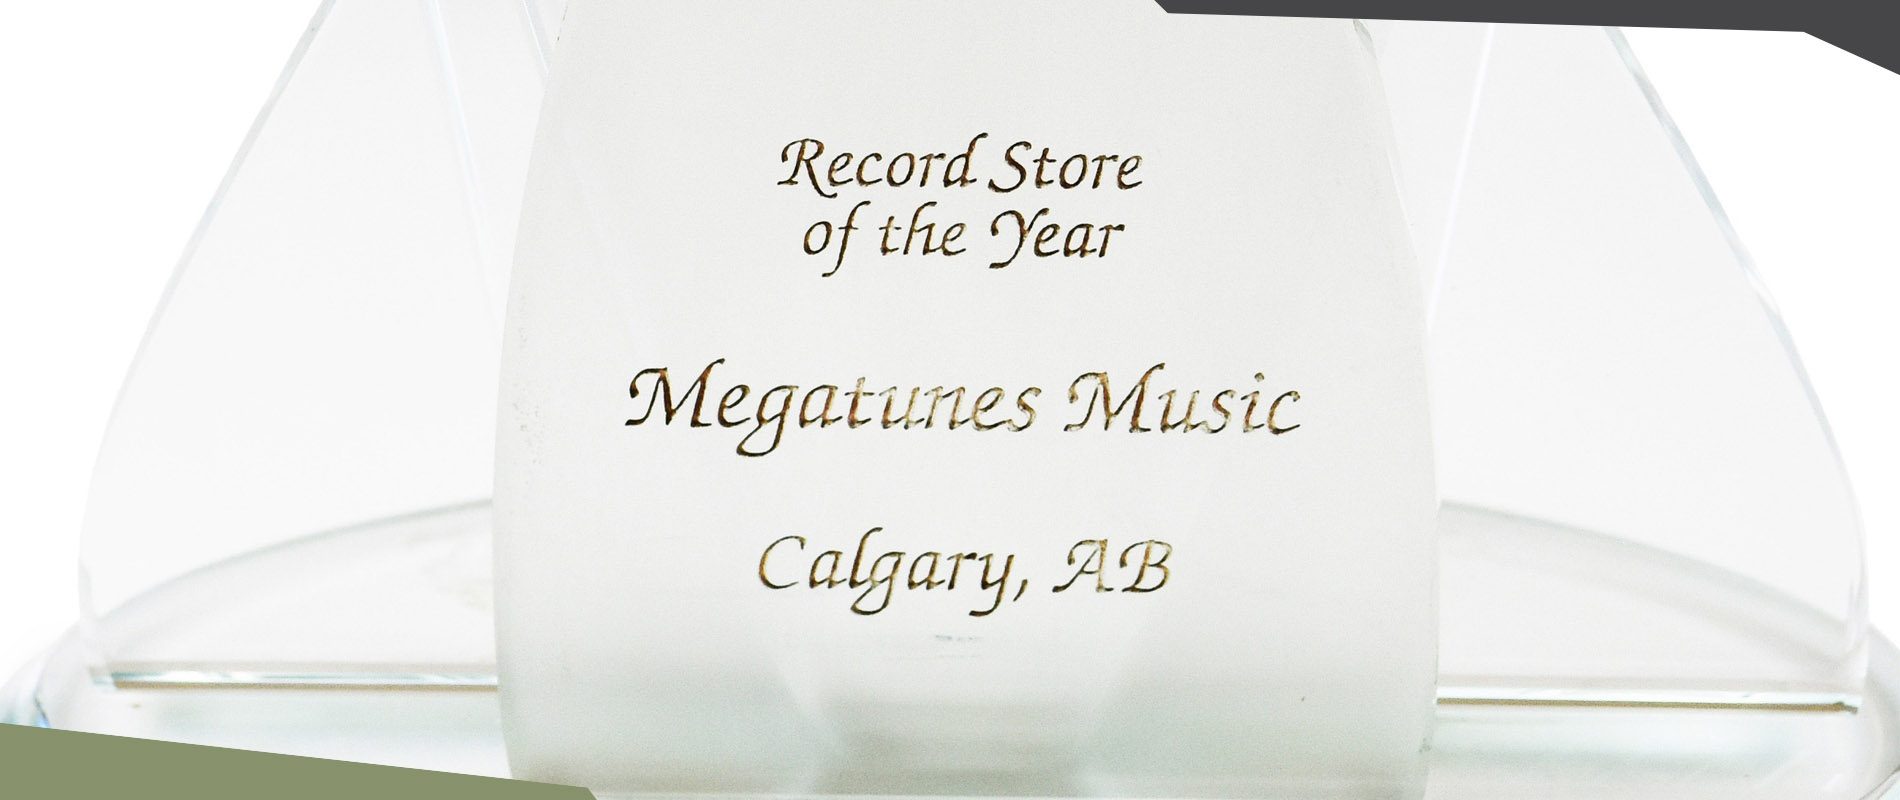 MEGATUNES MUSIC CCMA AWARD, 2004